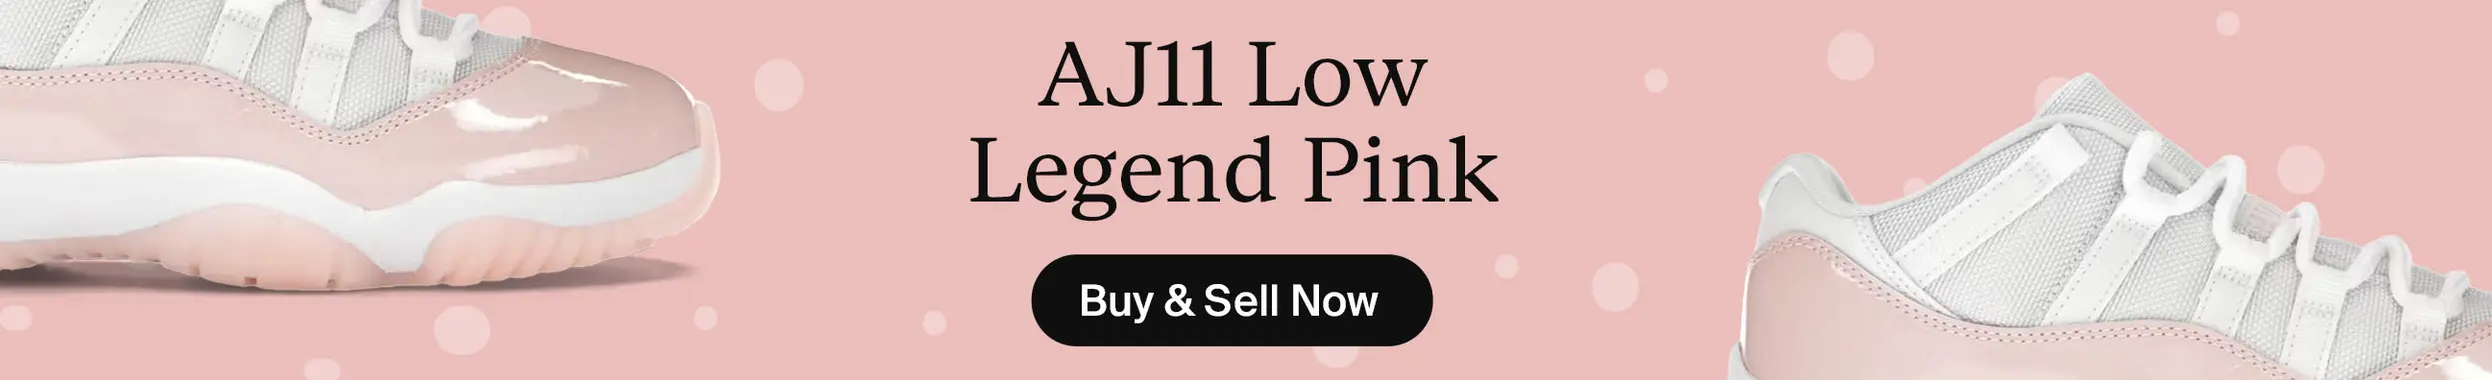 AJ11Low-LegendPink-Banners-ENPrimary_Desktop copy.jpg